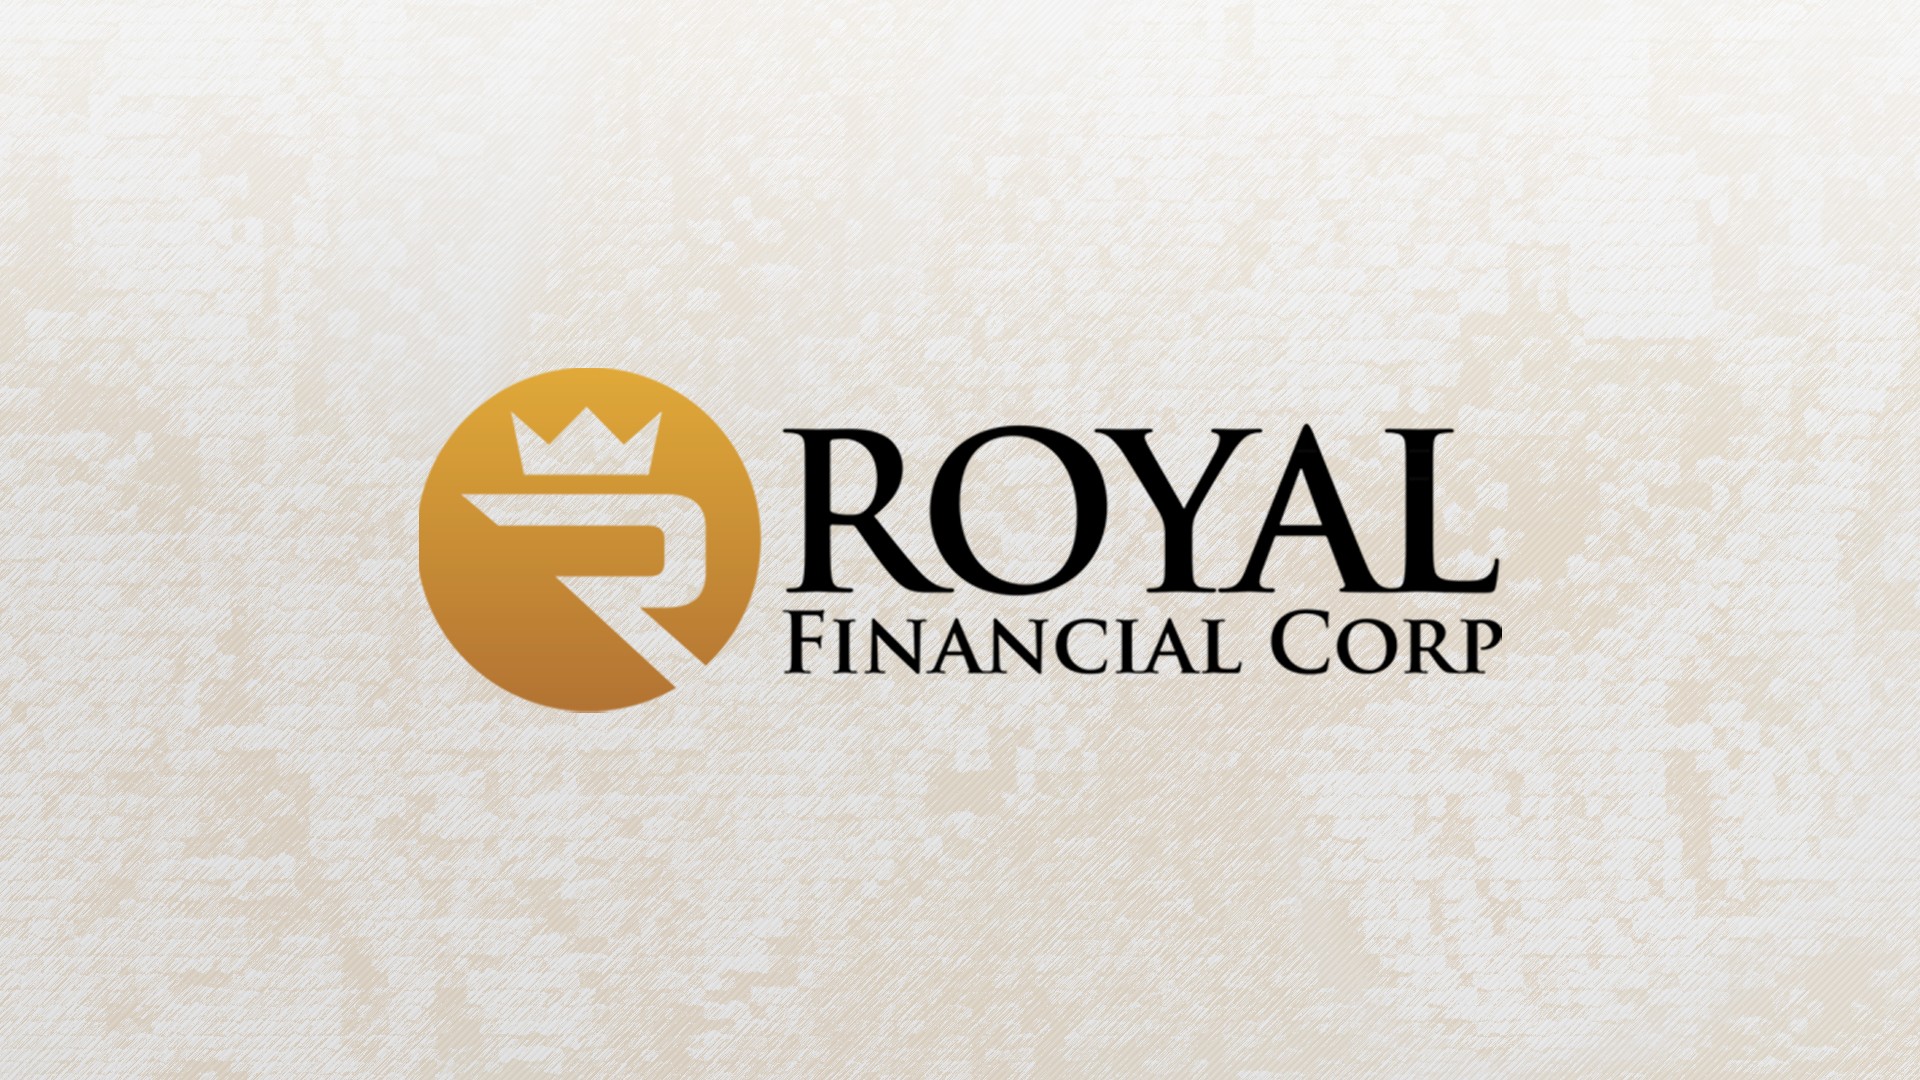 Royal Financial Corp | LinkedIn